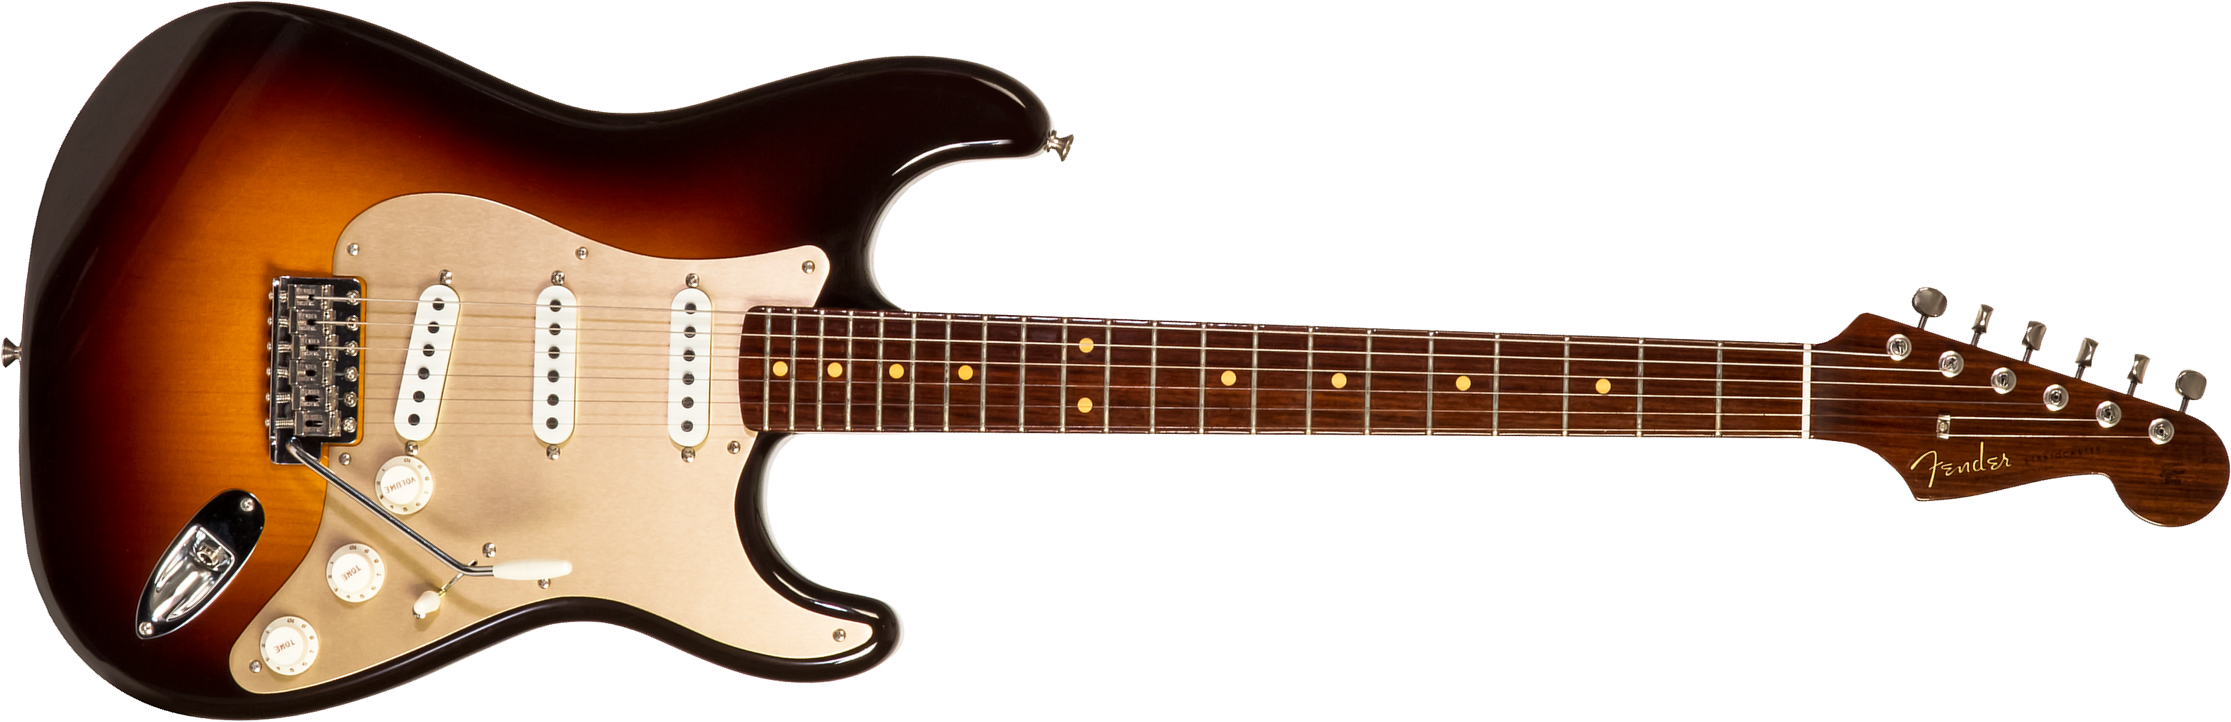 Fender Custom Shop Strat 1957 3s Trem Rw #cz548509 - Closet Classic 2-color Sunburst - Televorm elektrische gitaar - Main picture